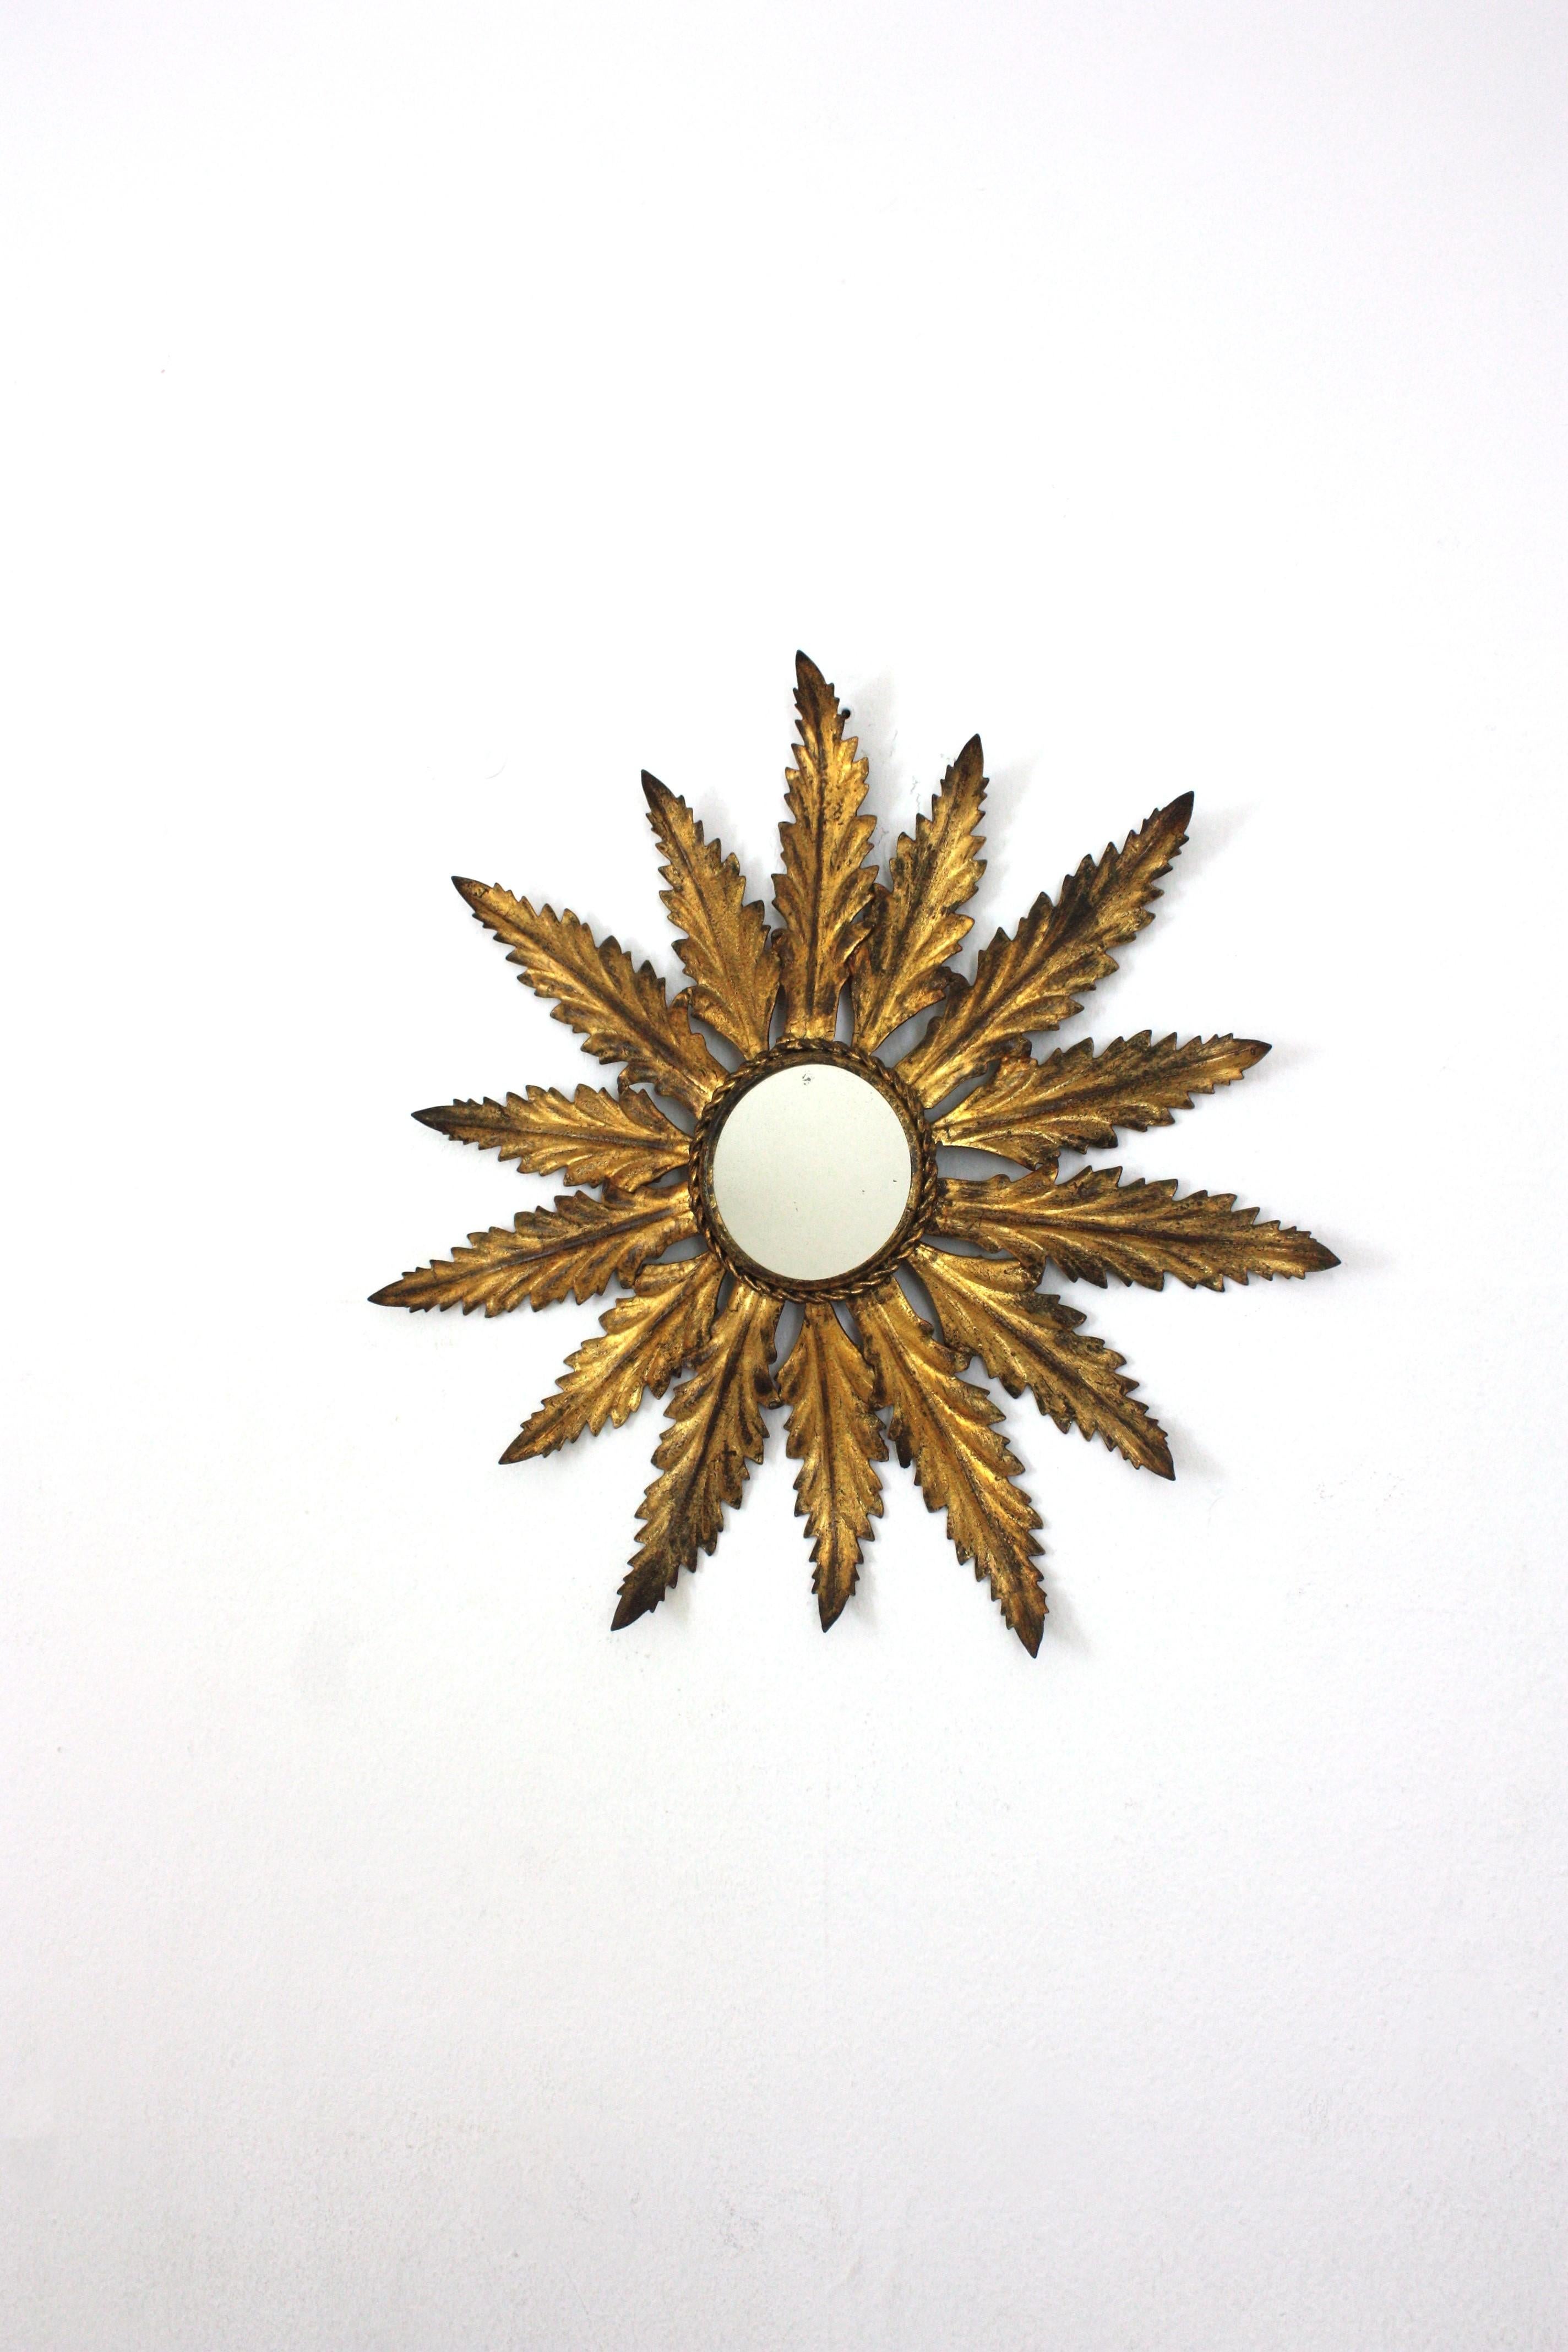 Spanish Leafed Sunburst Mirror in Gilt Metal, 1940s For Sale 3